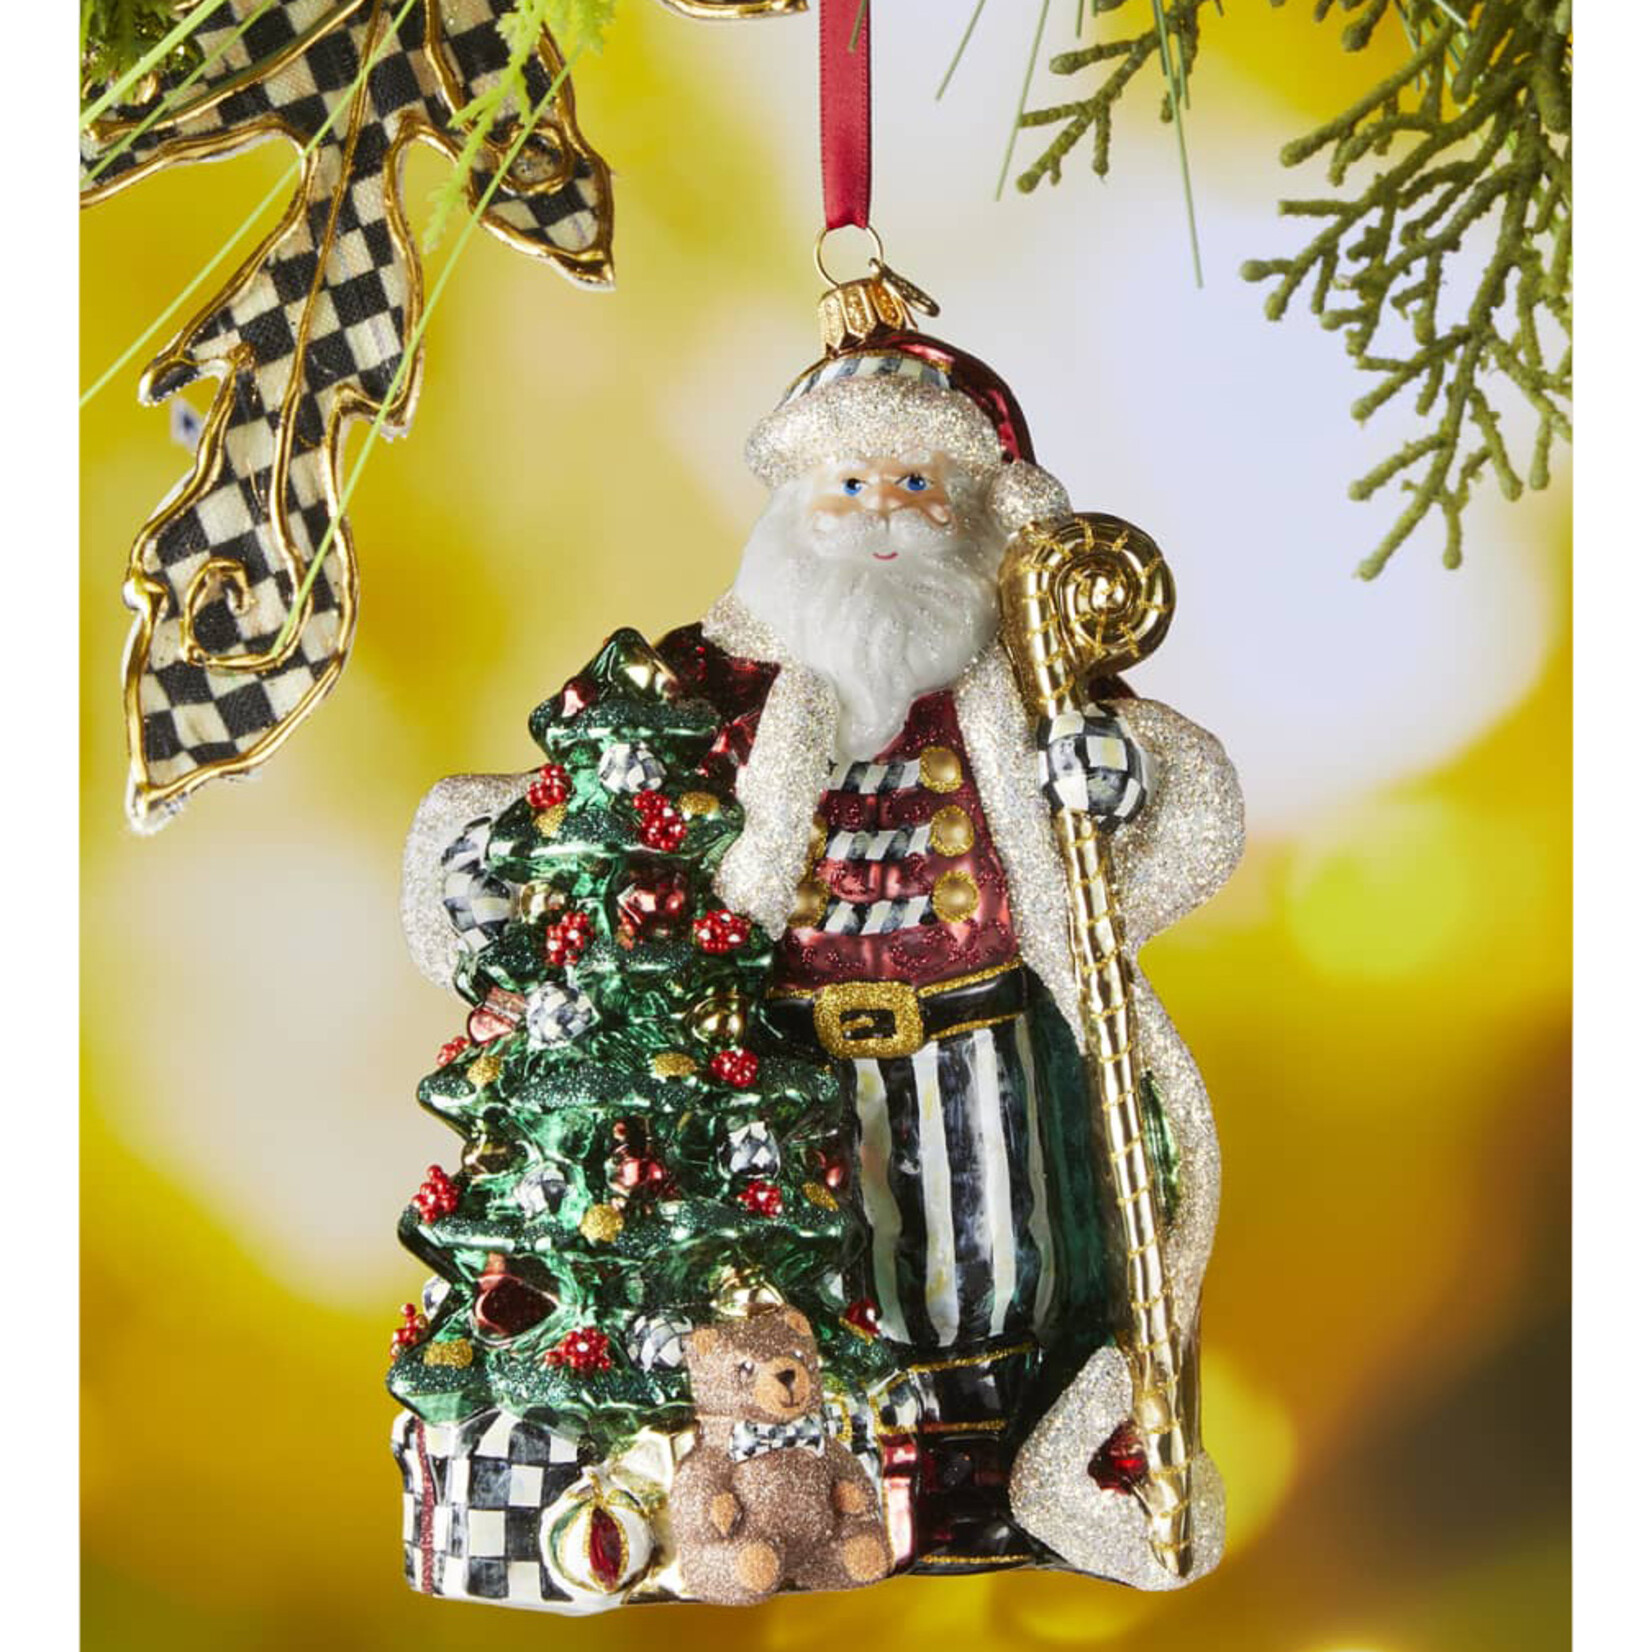 MacKenzie-Childs Glass Ornament - Christmas Magic Santa with Staff